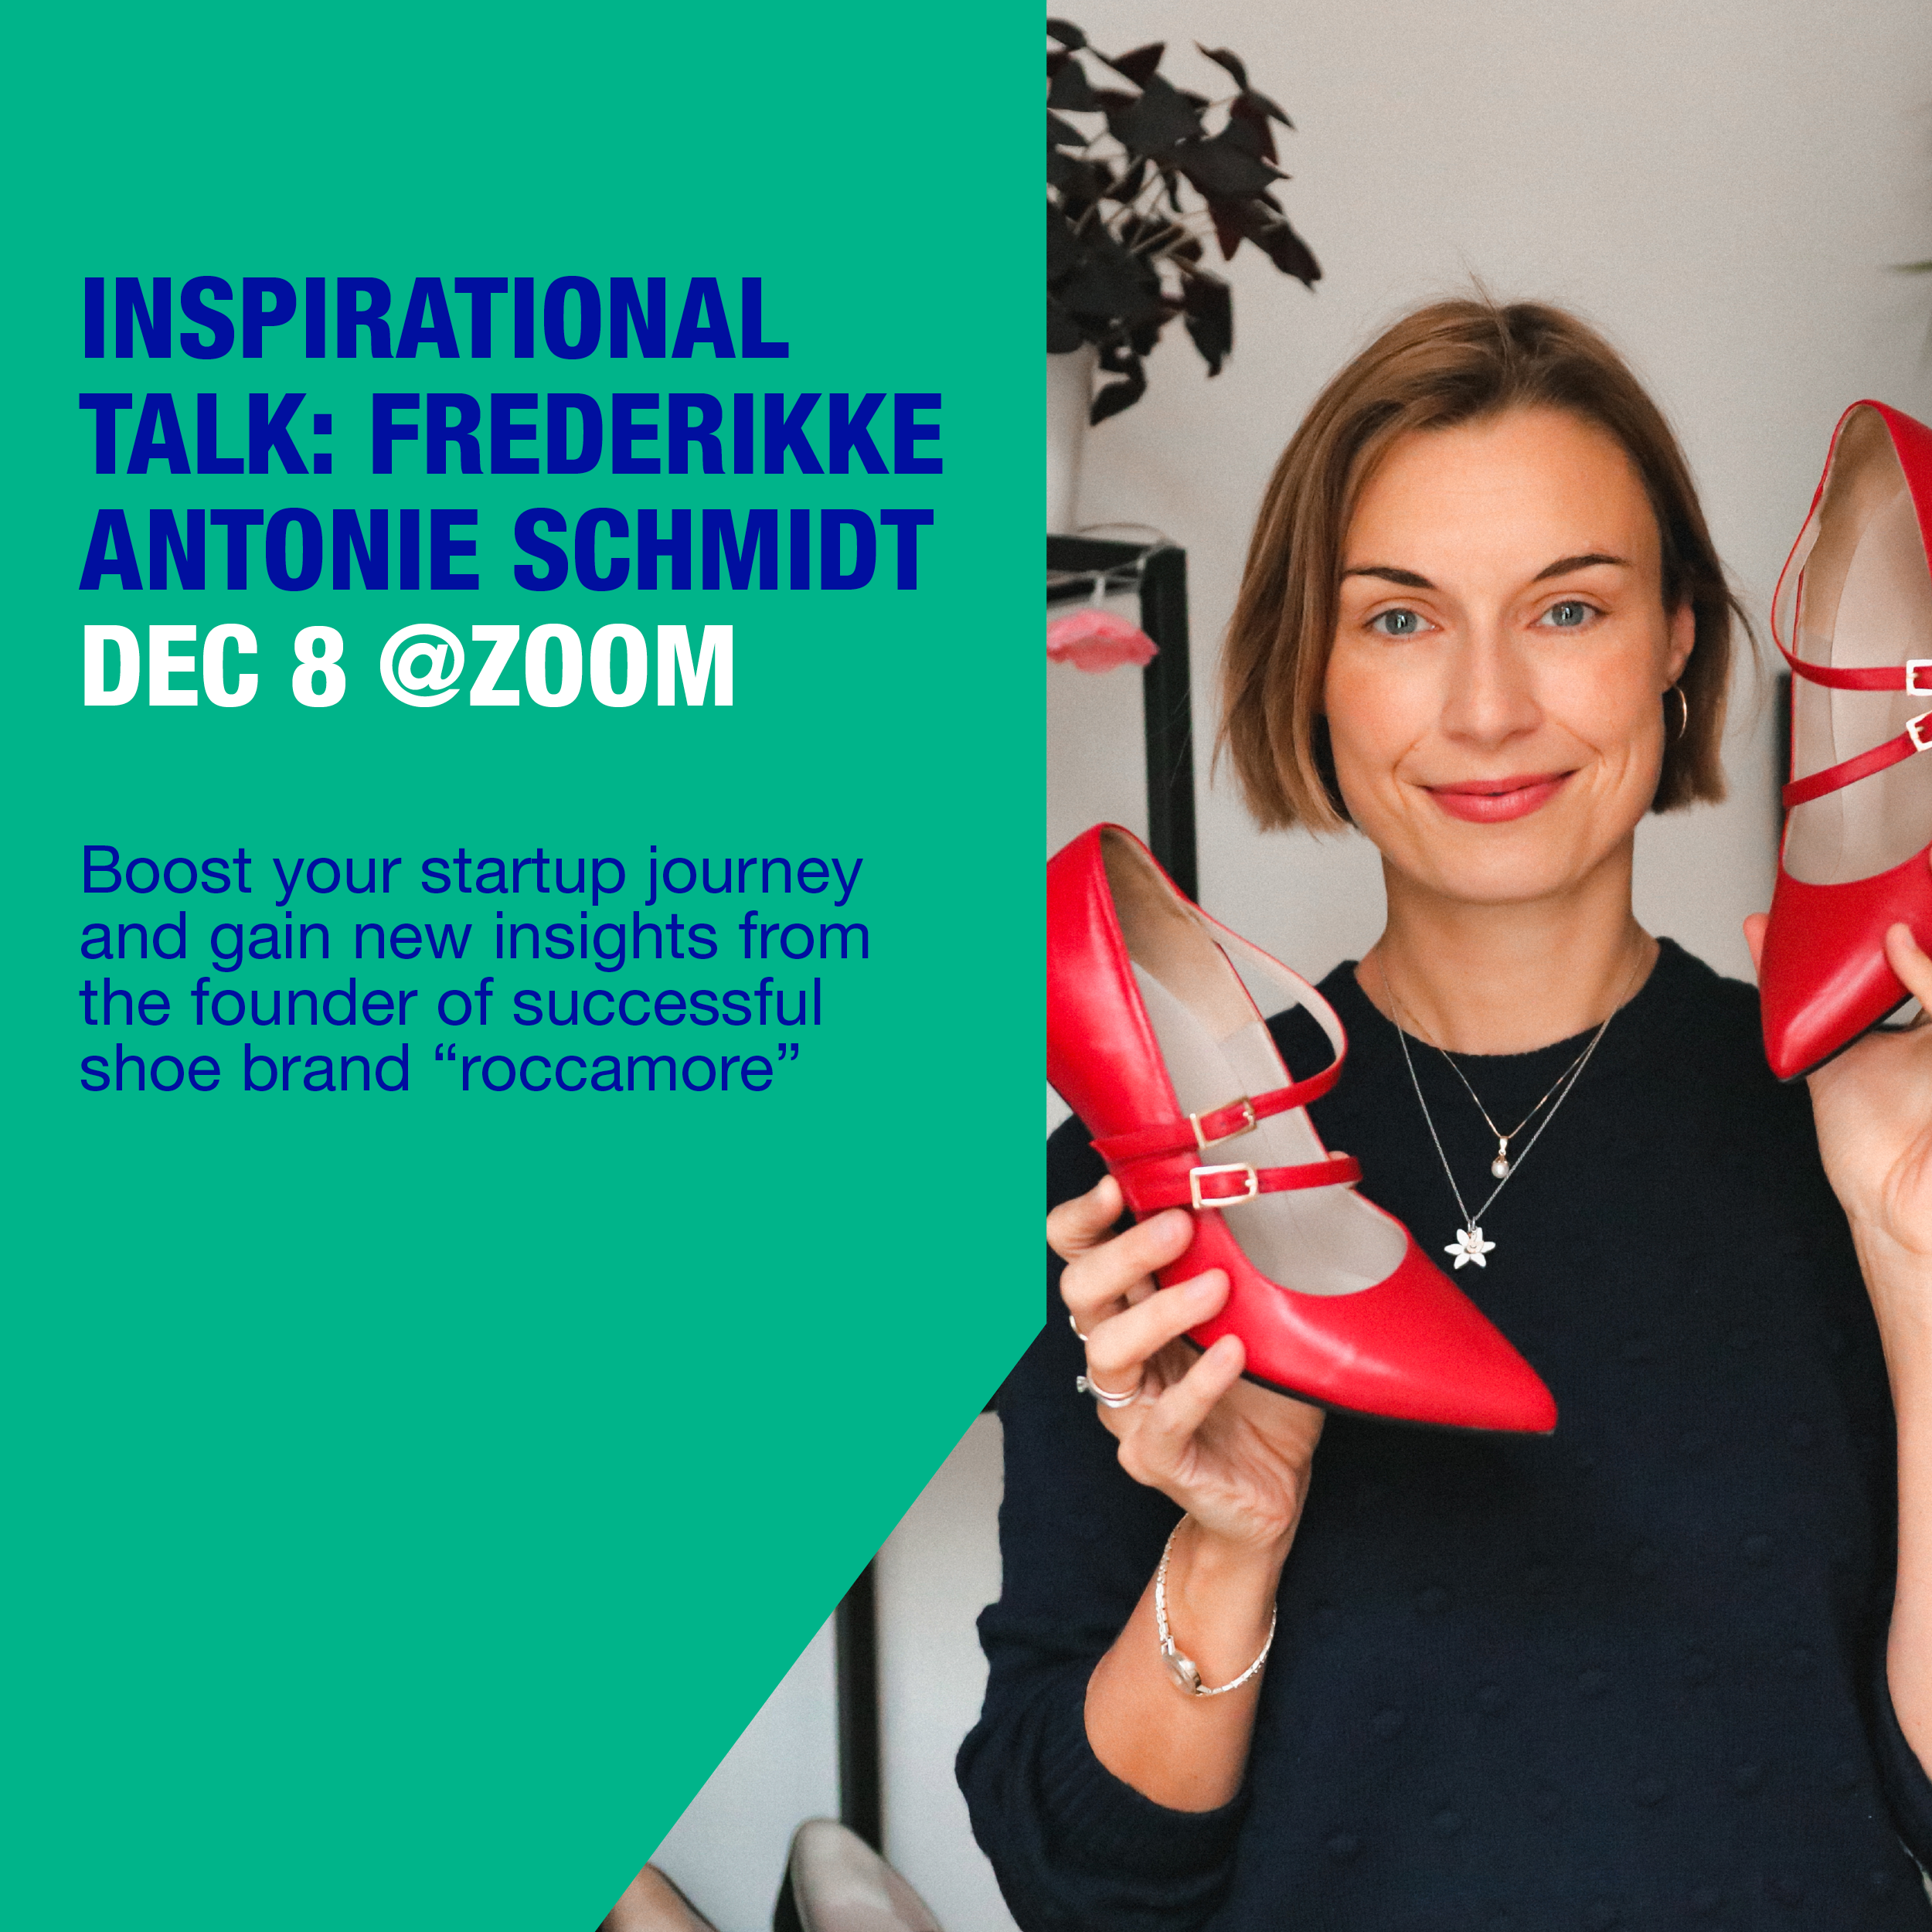 NEH event - inspirational talk with Frederikke Antonie Schmidt by Lund University